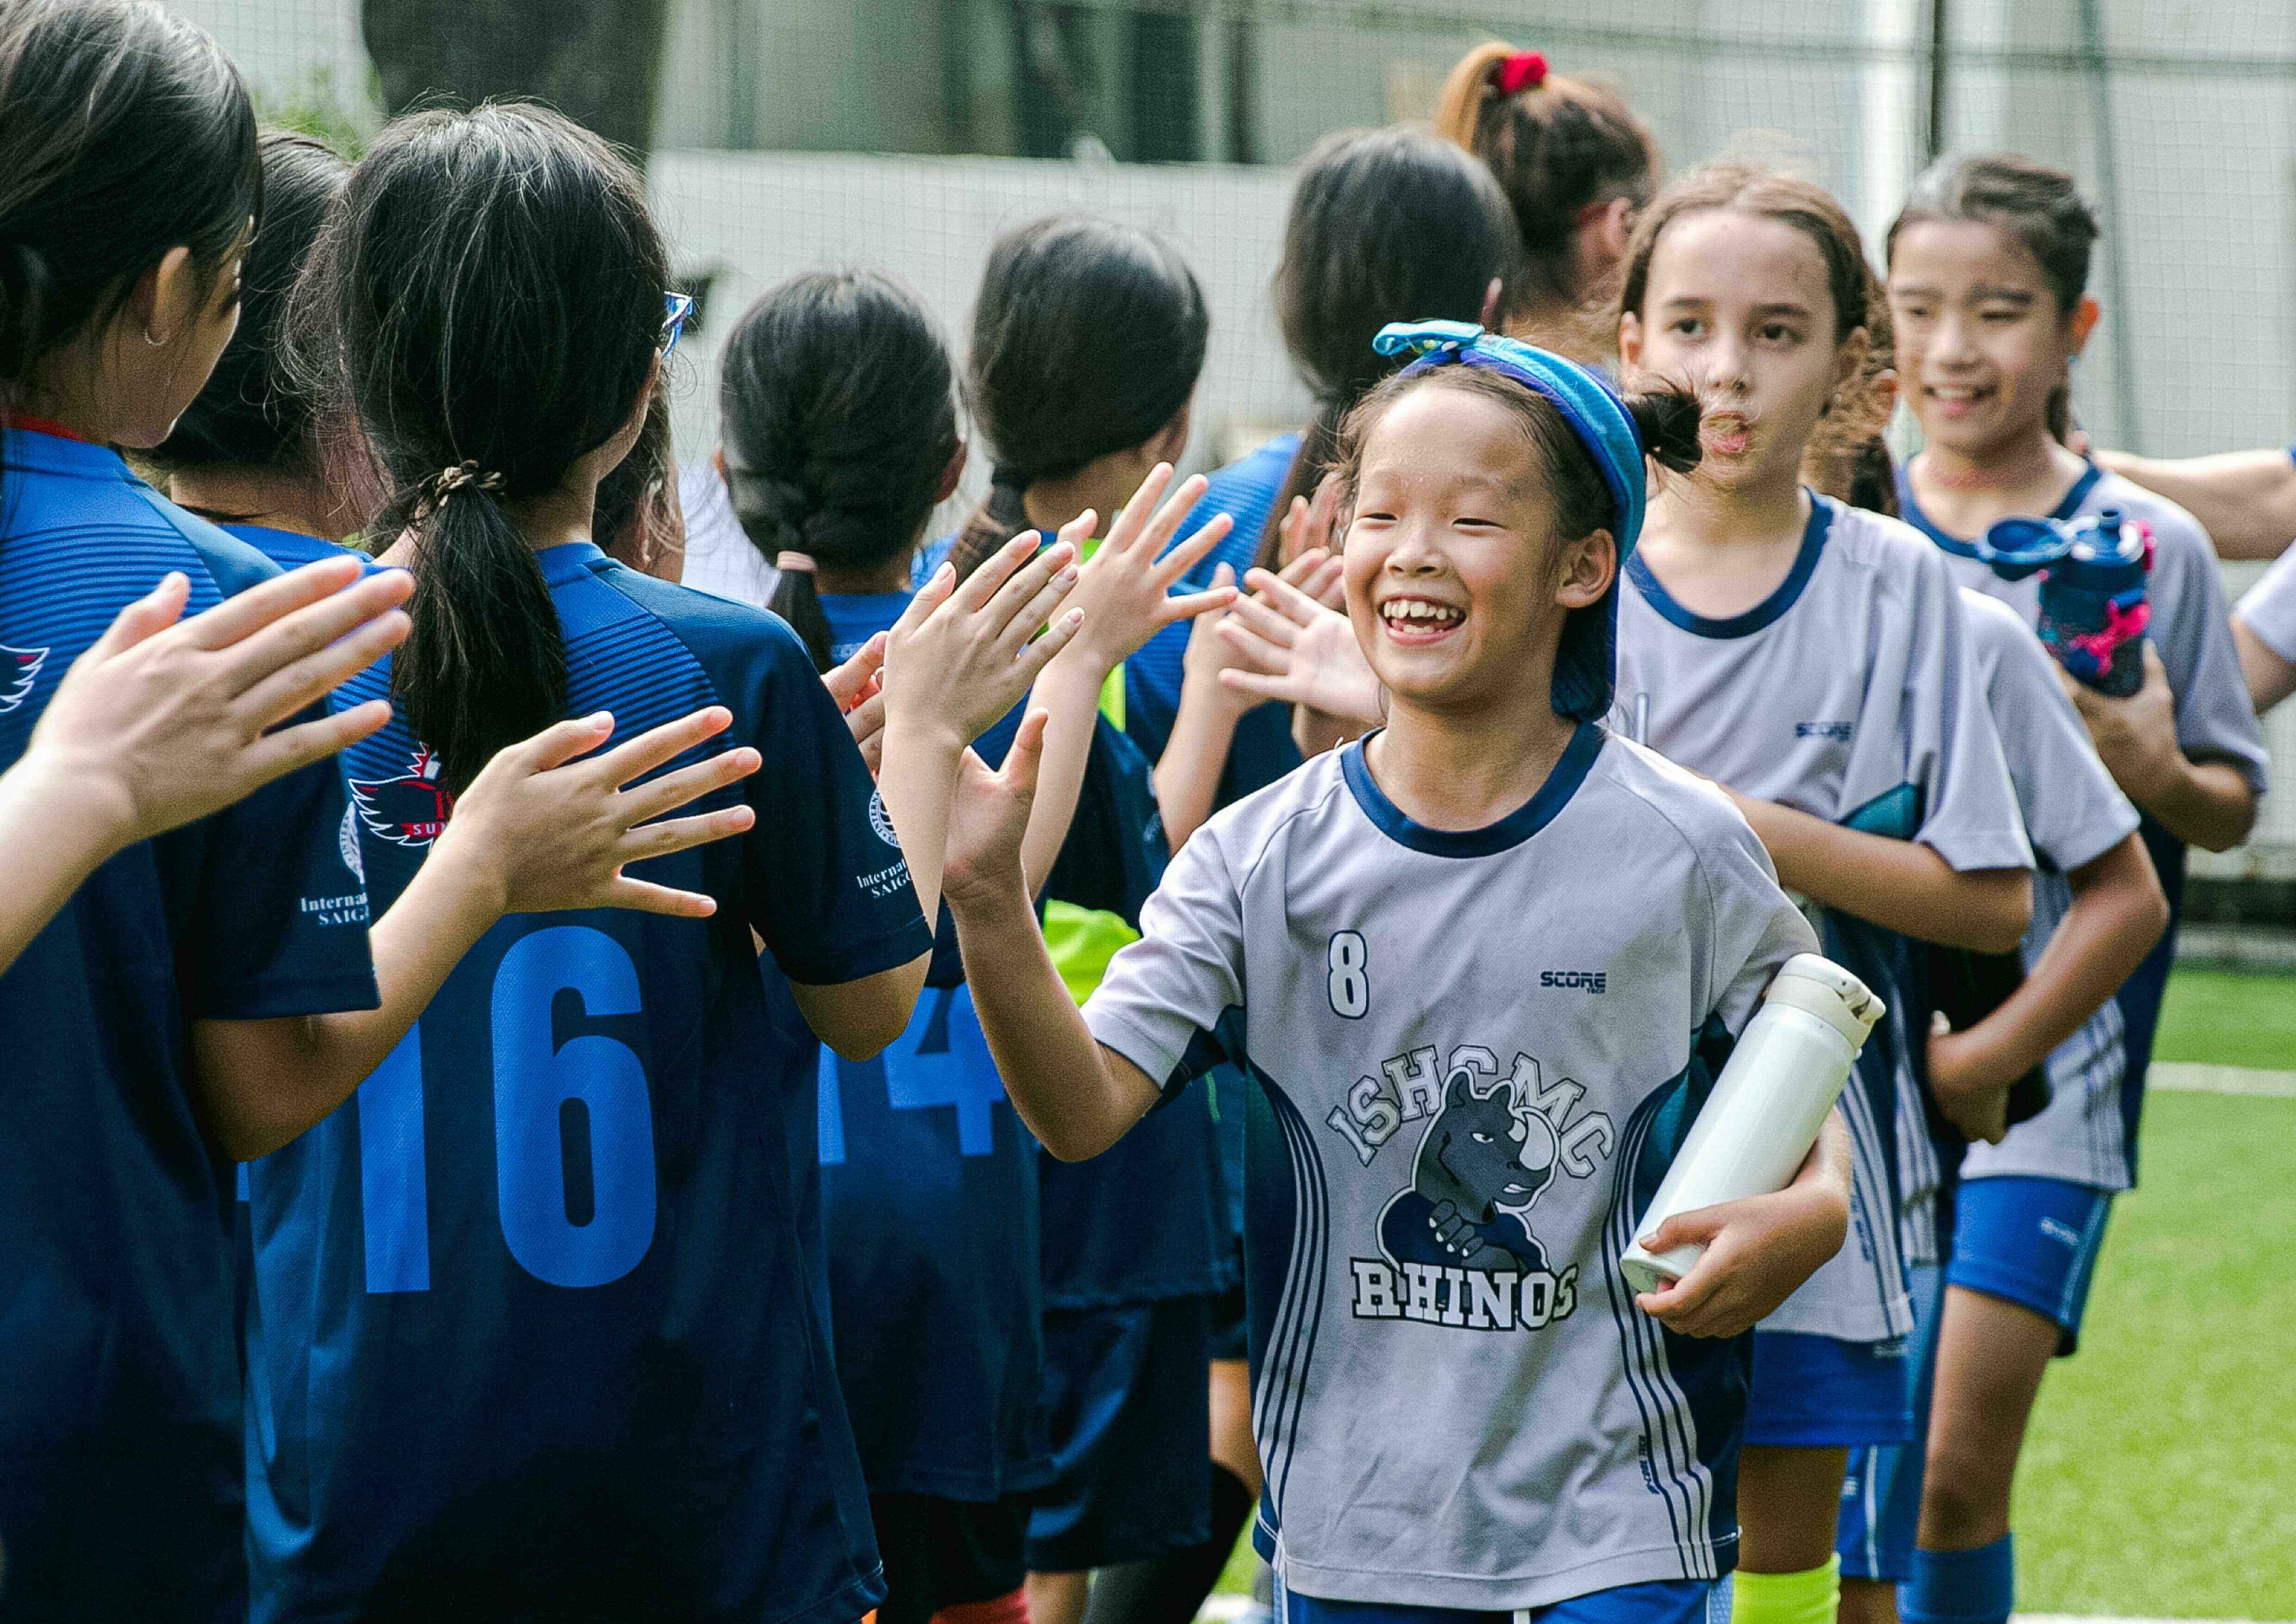 Football activities at International School Ho Chi Minh City - Secondary Campus